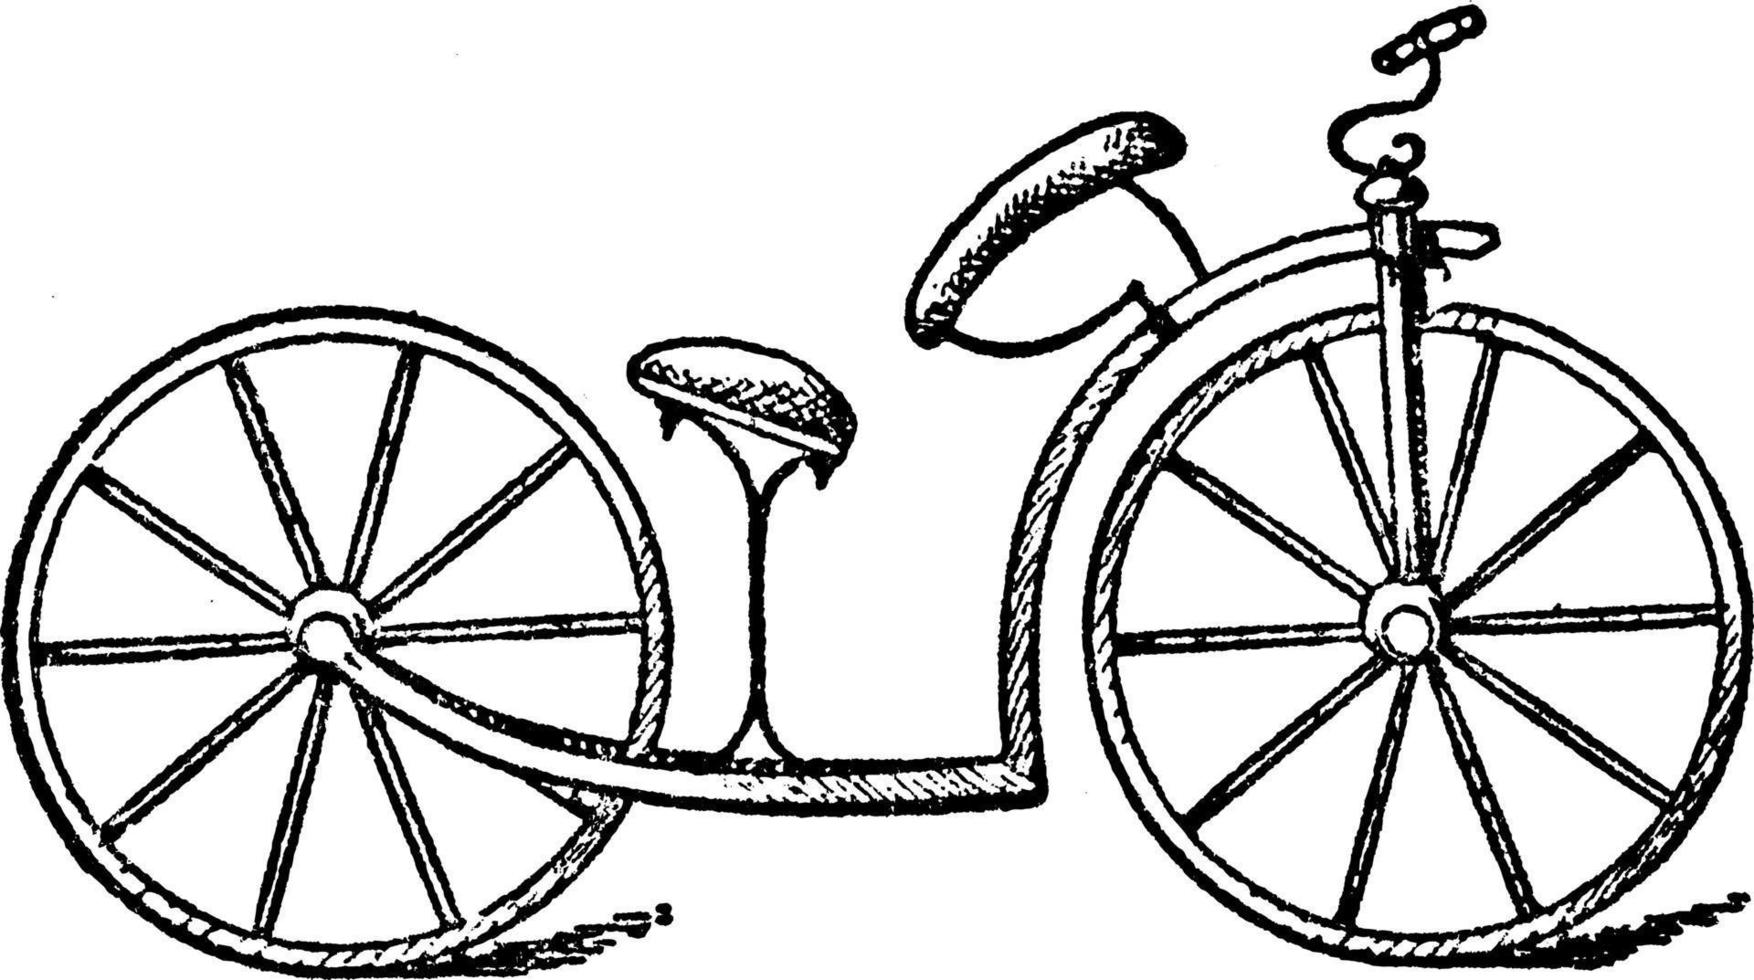 Bicycle, vintage illustration. vector